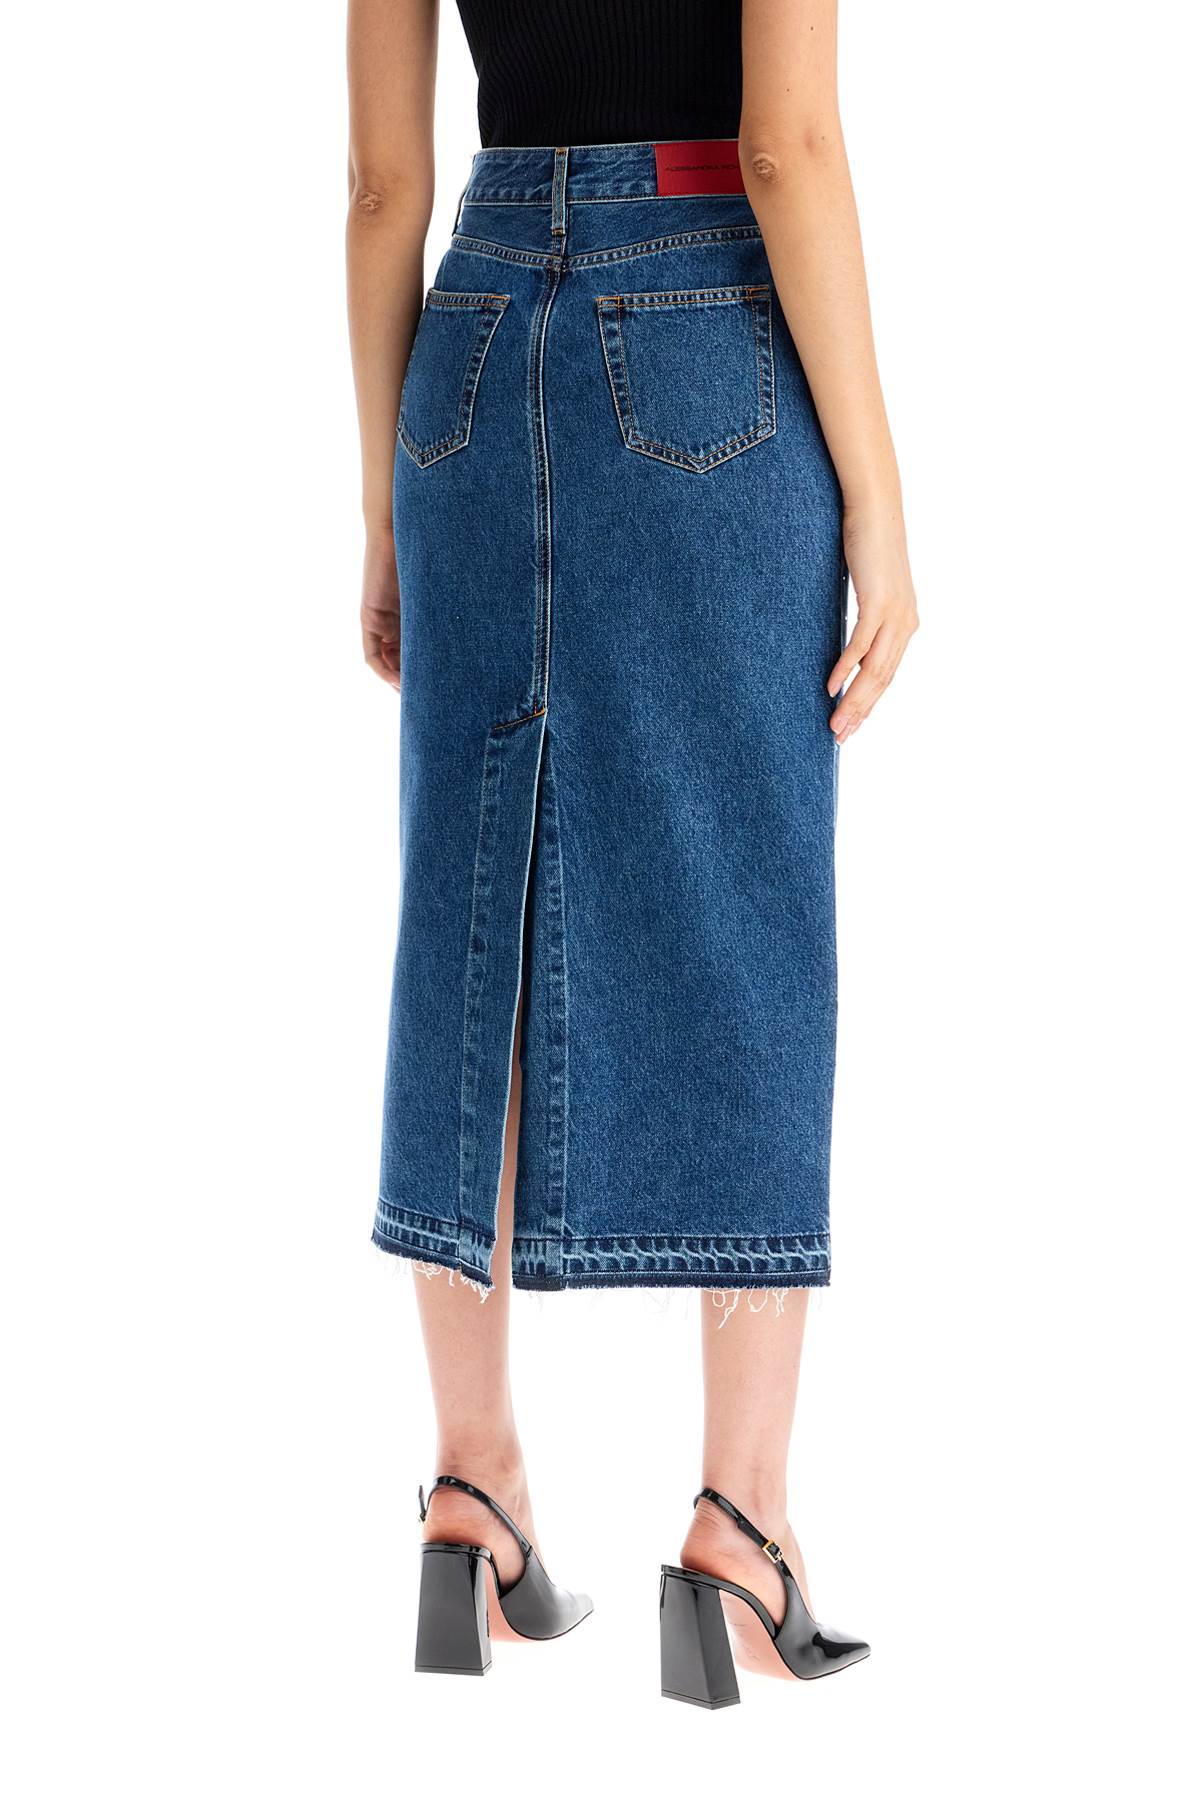 Alessandra Rich "denim Midi Skirt With Rhin   Blue